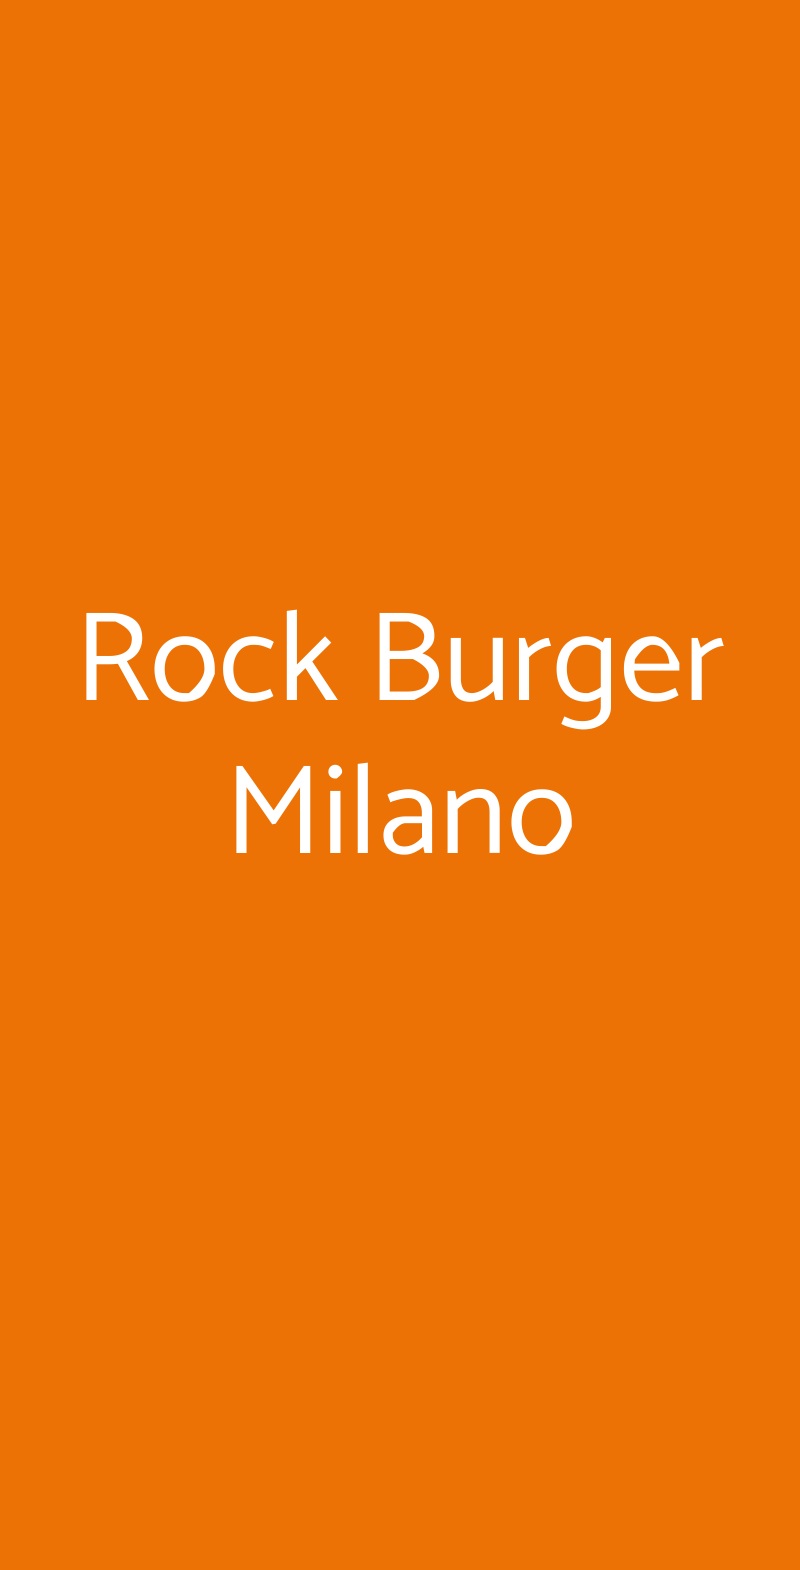 Rock Burger Milano Milano menù 1 pagina